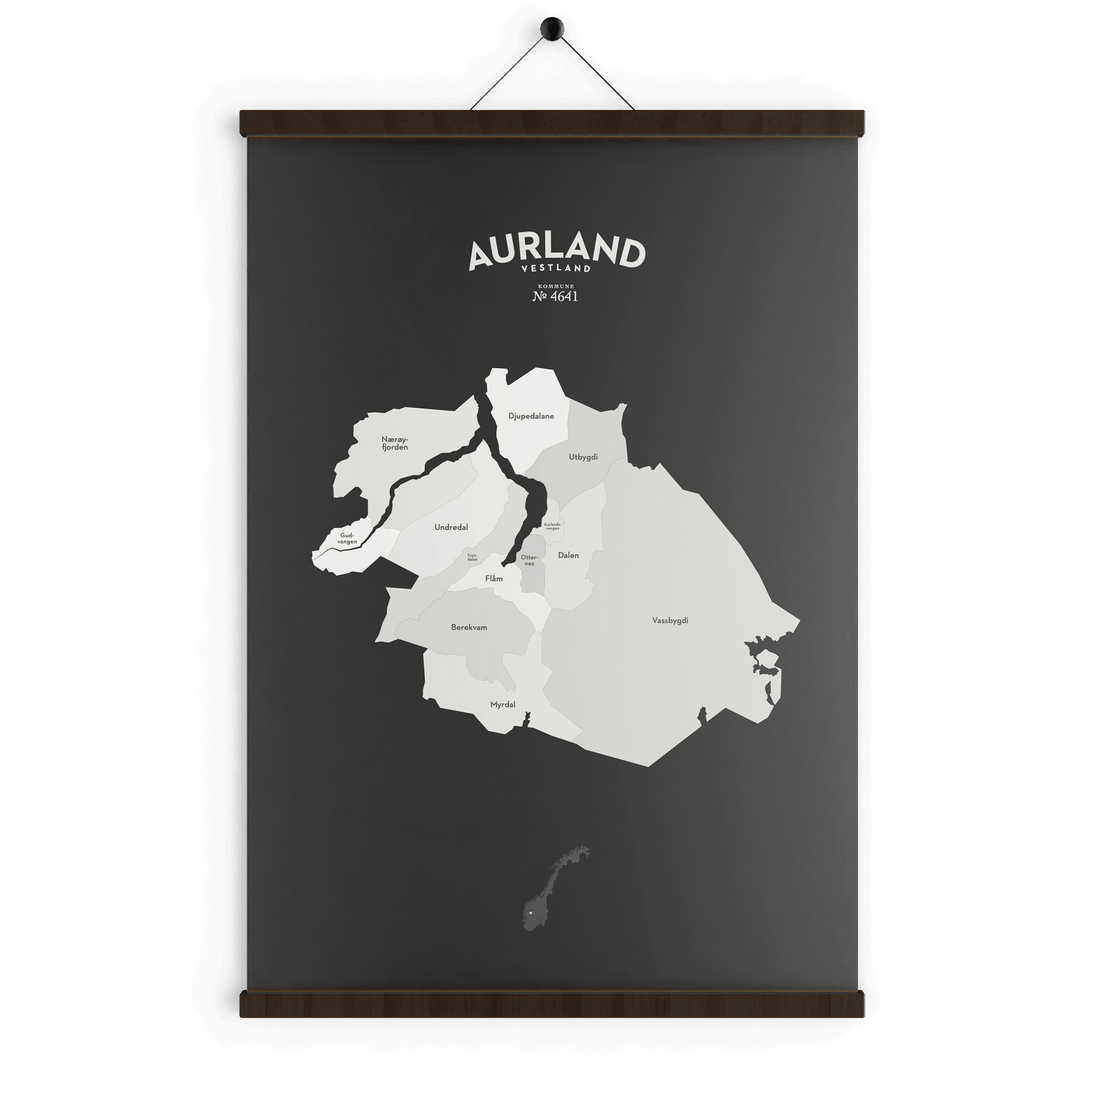 Aurland